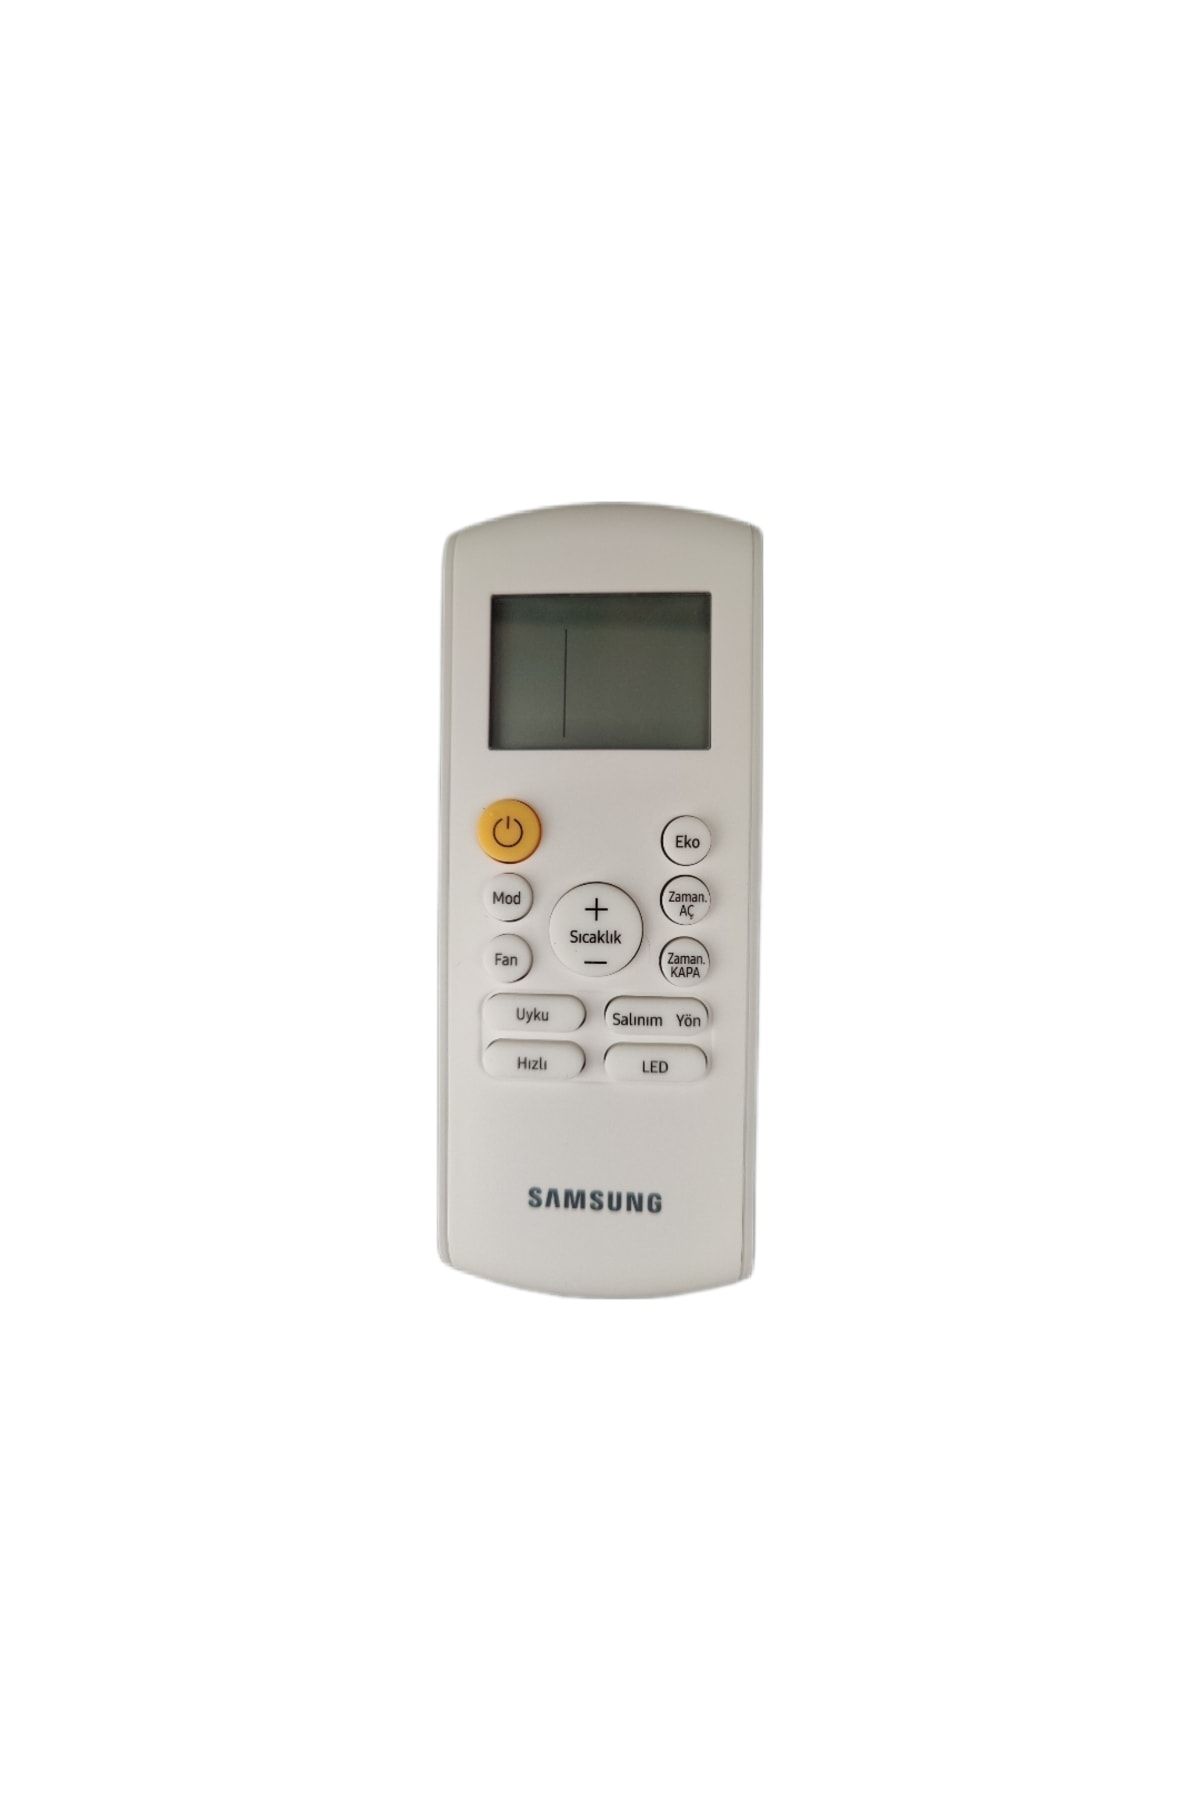 Samsung Klima Kumanda T Serisi Orjinal Db82-05683a